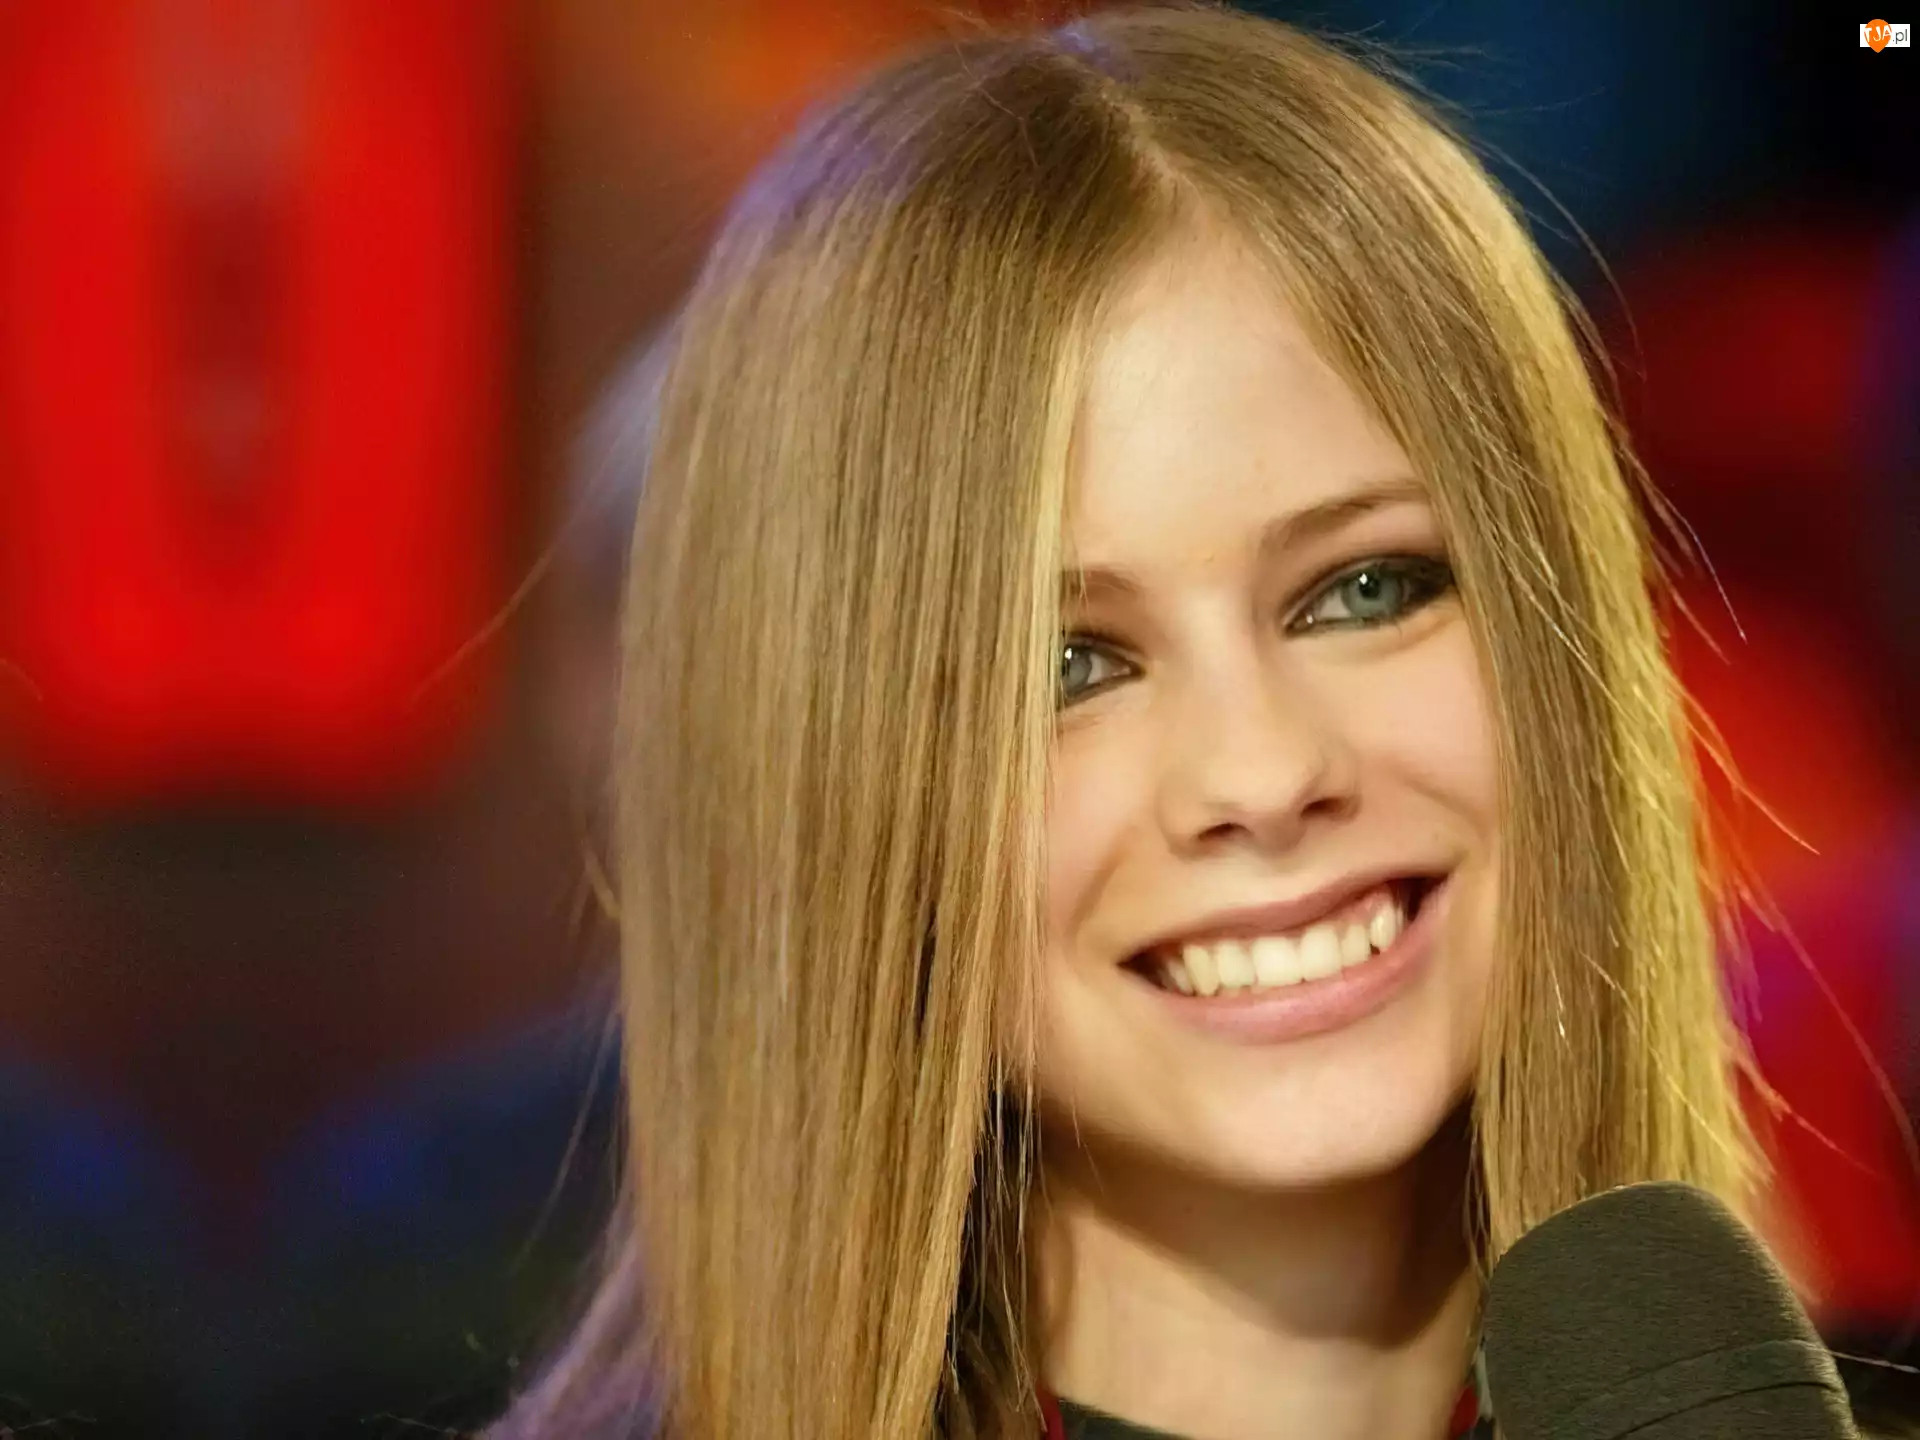 Buzia, Avril Lavigne